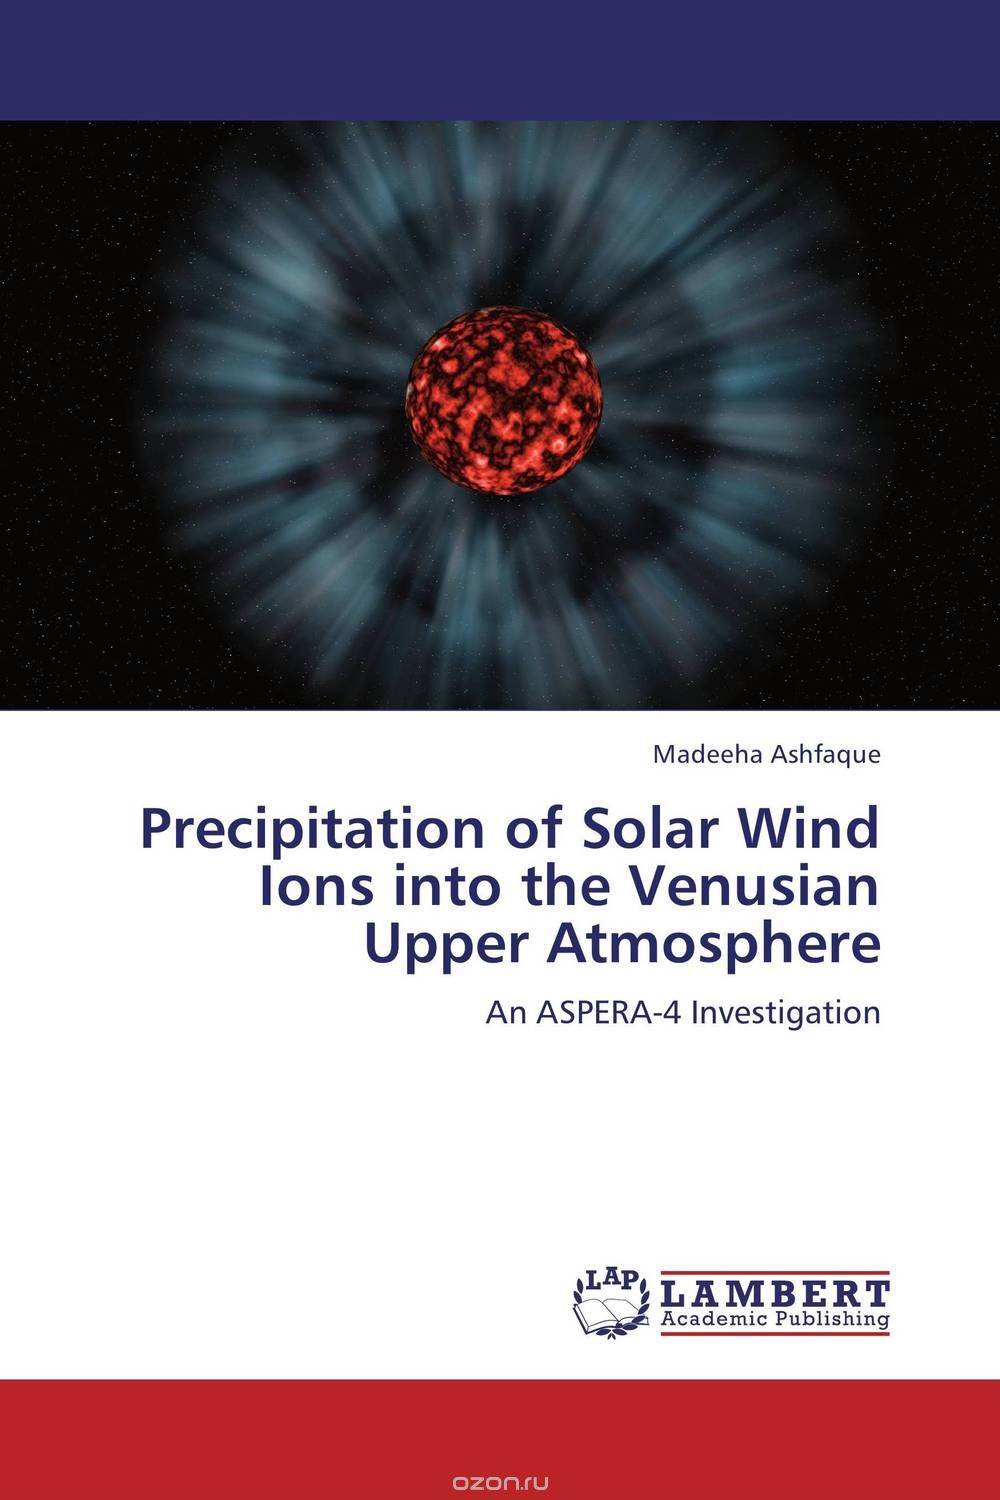 Скачать книгу "Precipitation of Solar Wind Ions into the Venusian Upper Atmosphere"